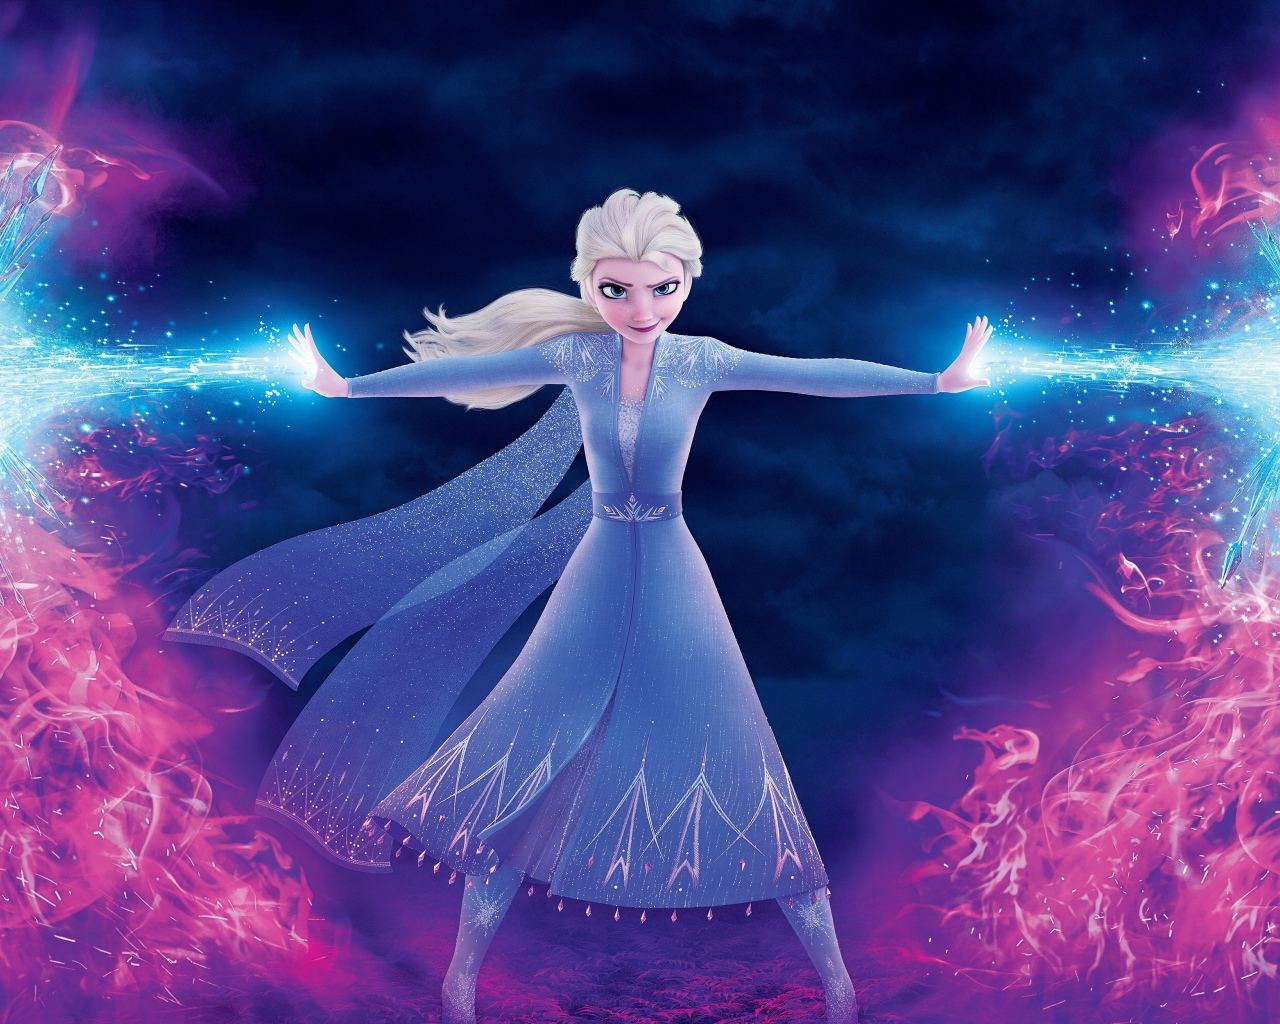 Beautiful Elsa with Frozen Power Cartoon Character Frozen 2